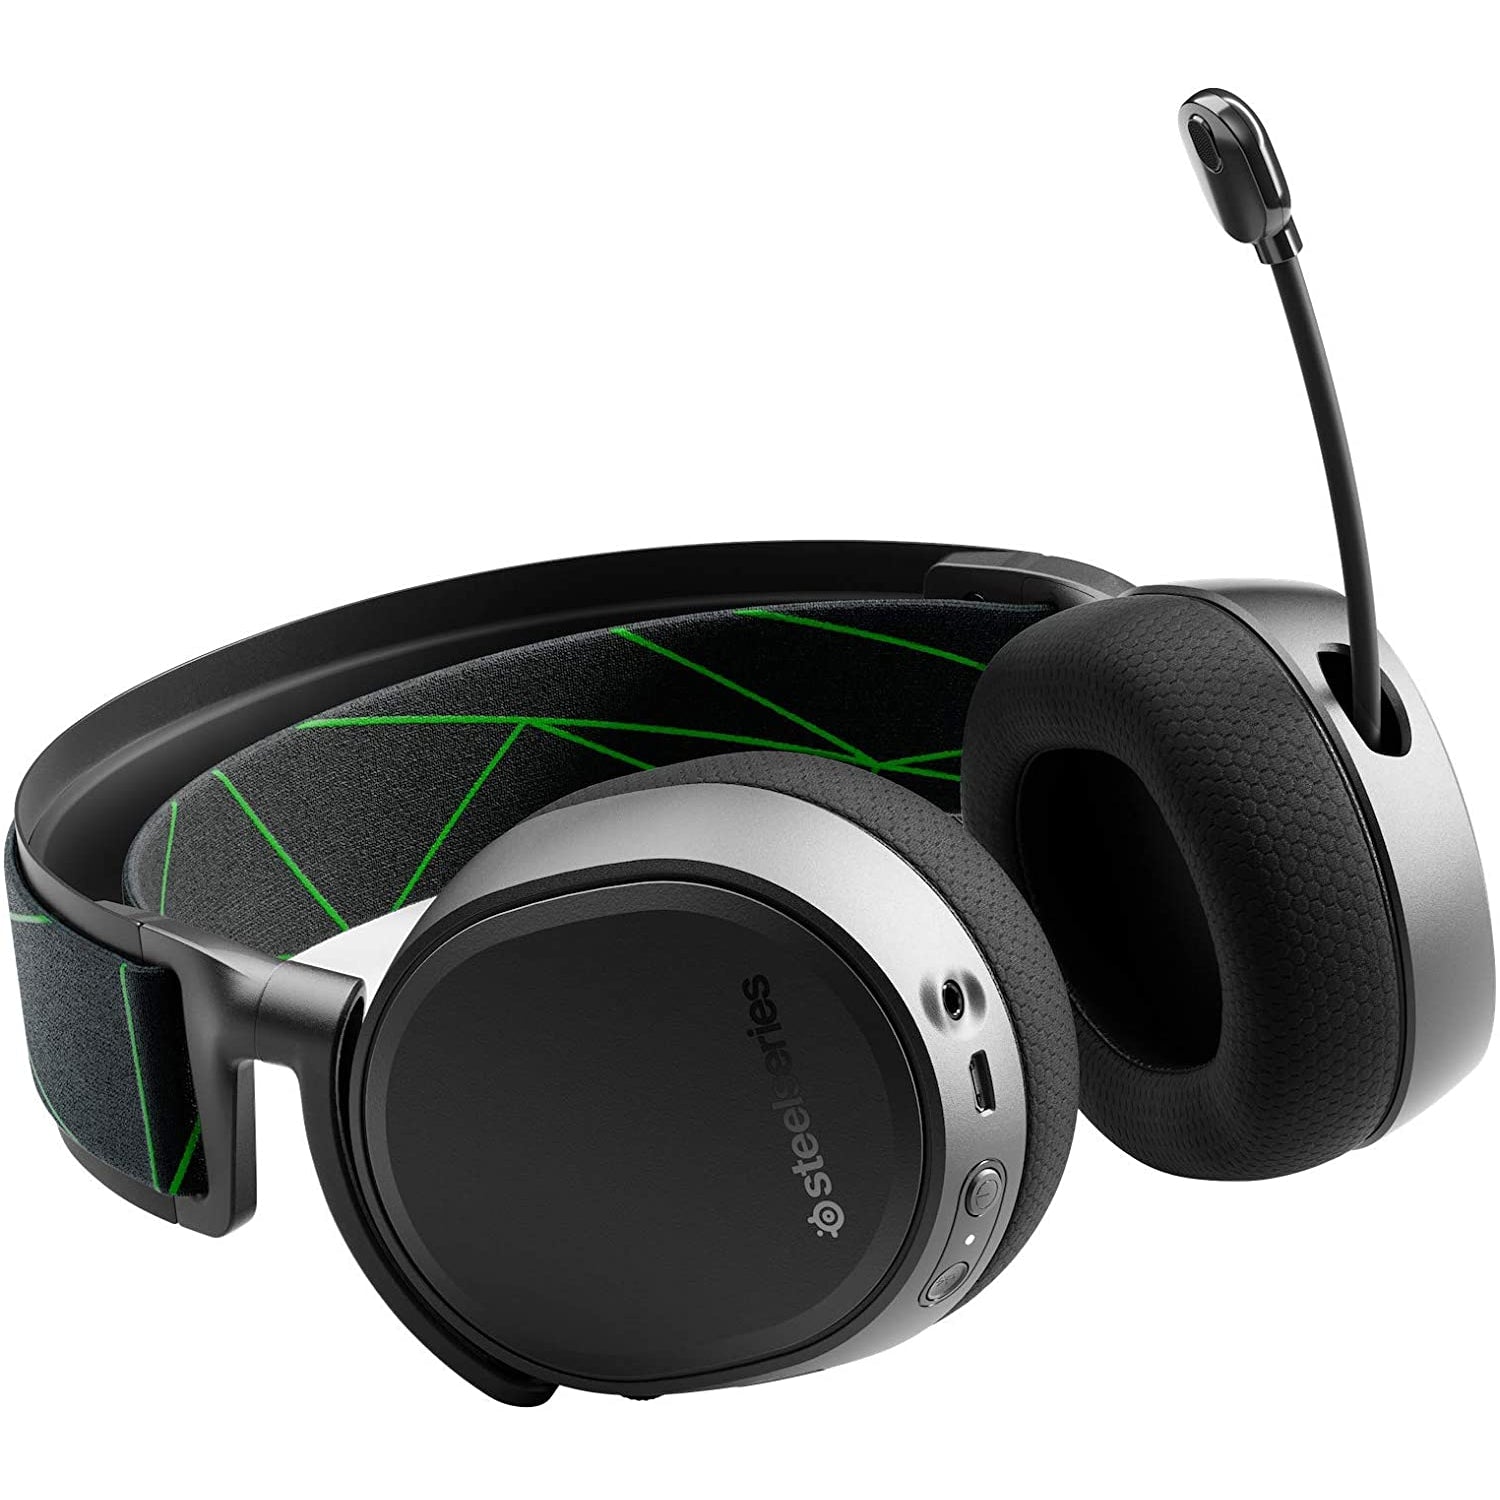 SteelSeries Arctis 9X Xbox One Wireless Headset - Black - Refurbished Excellent